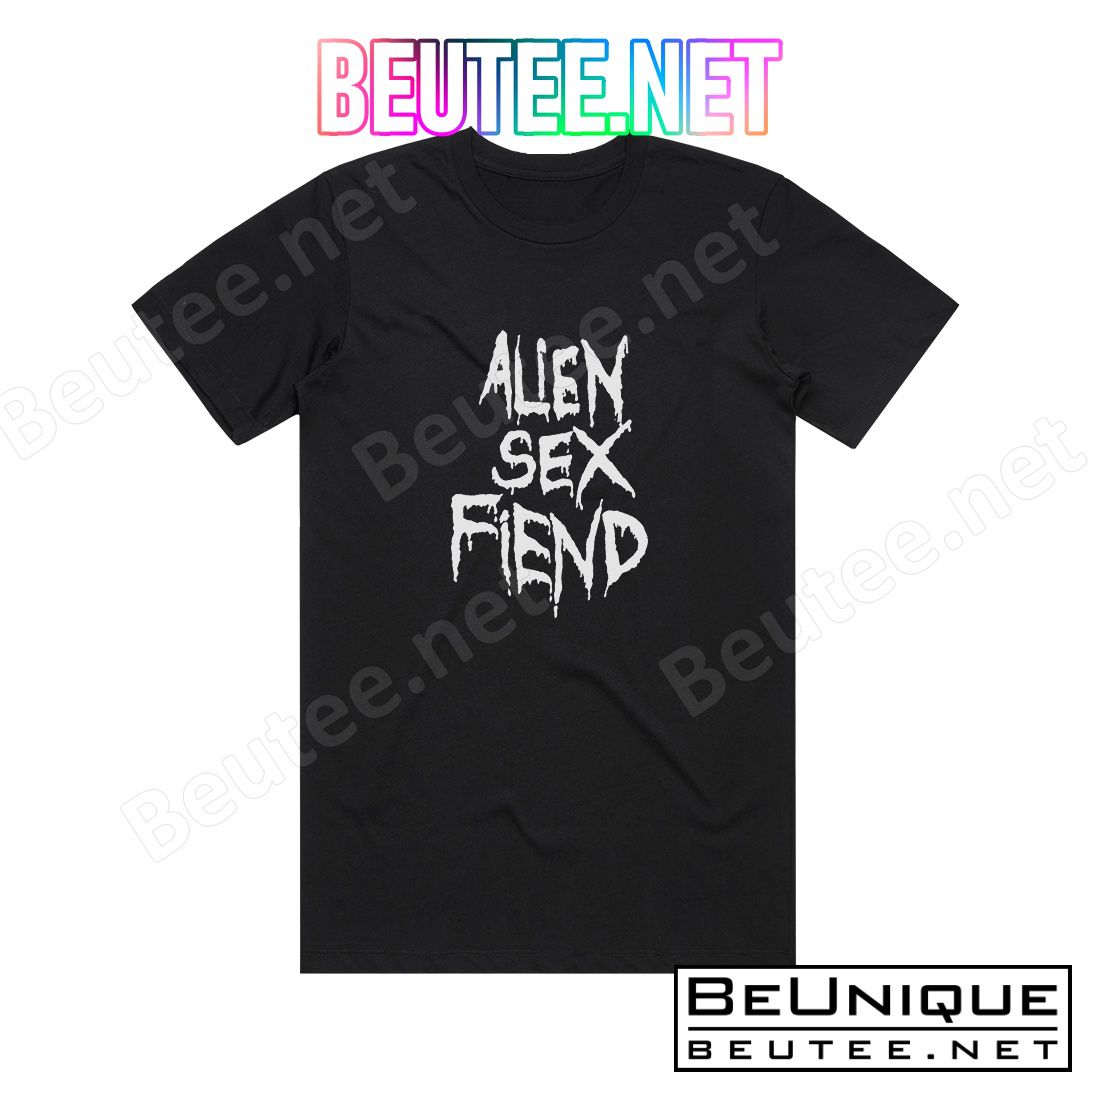 Alien Sex Fiend All Our Yesterdays Album Cover T-Shirt